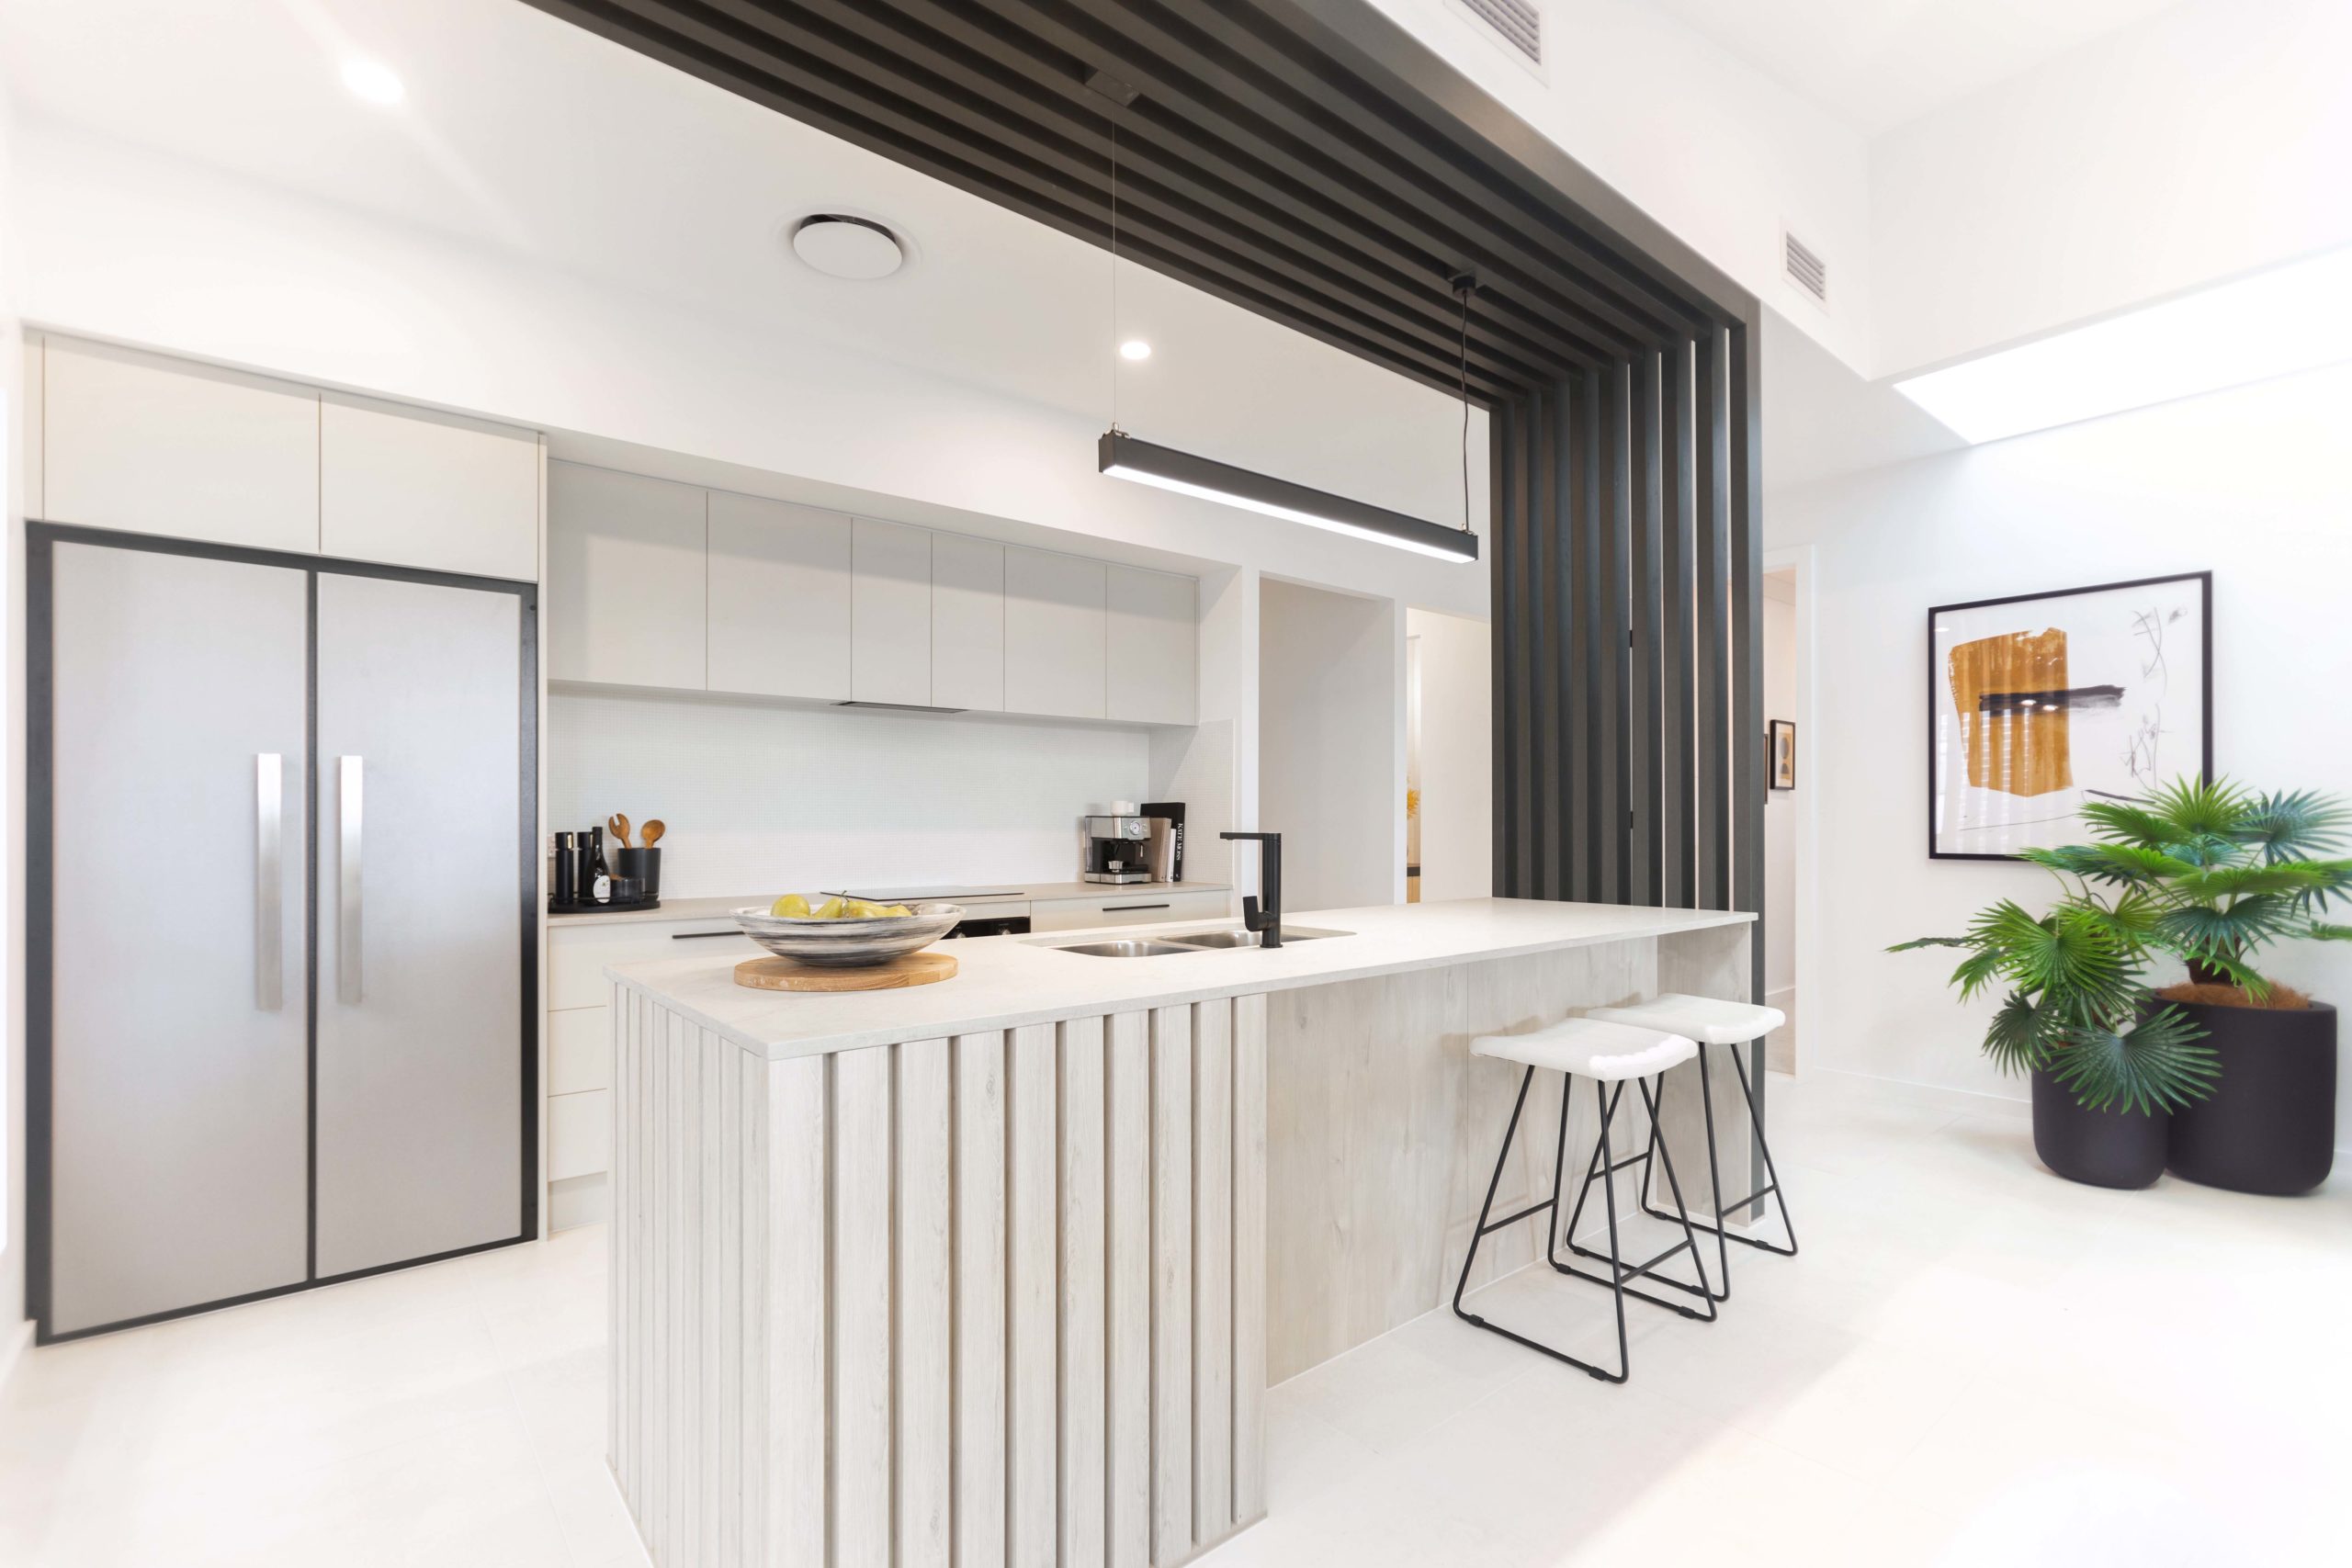 Hudson Homes Sydney Leppington Living Display Kitchen Bench Single Storey